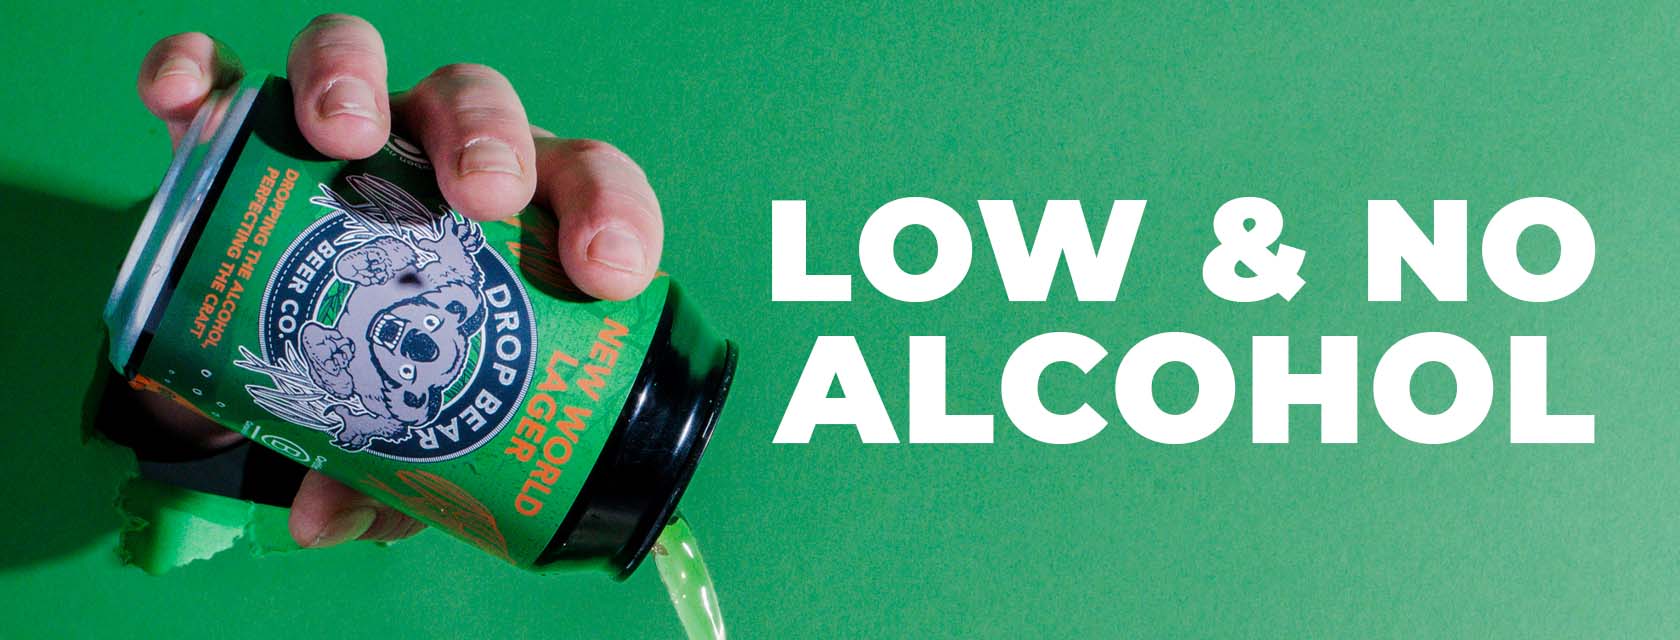 Low & No Alcohol Button